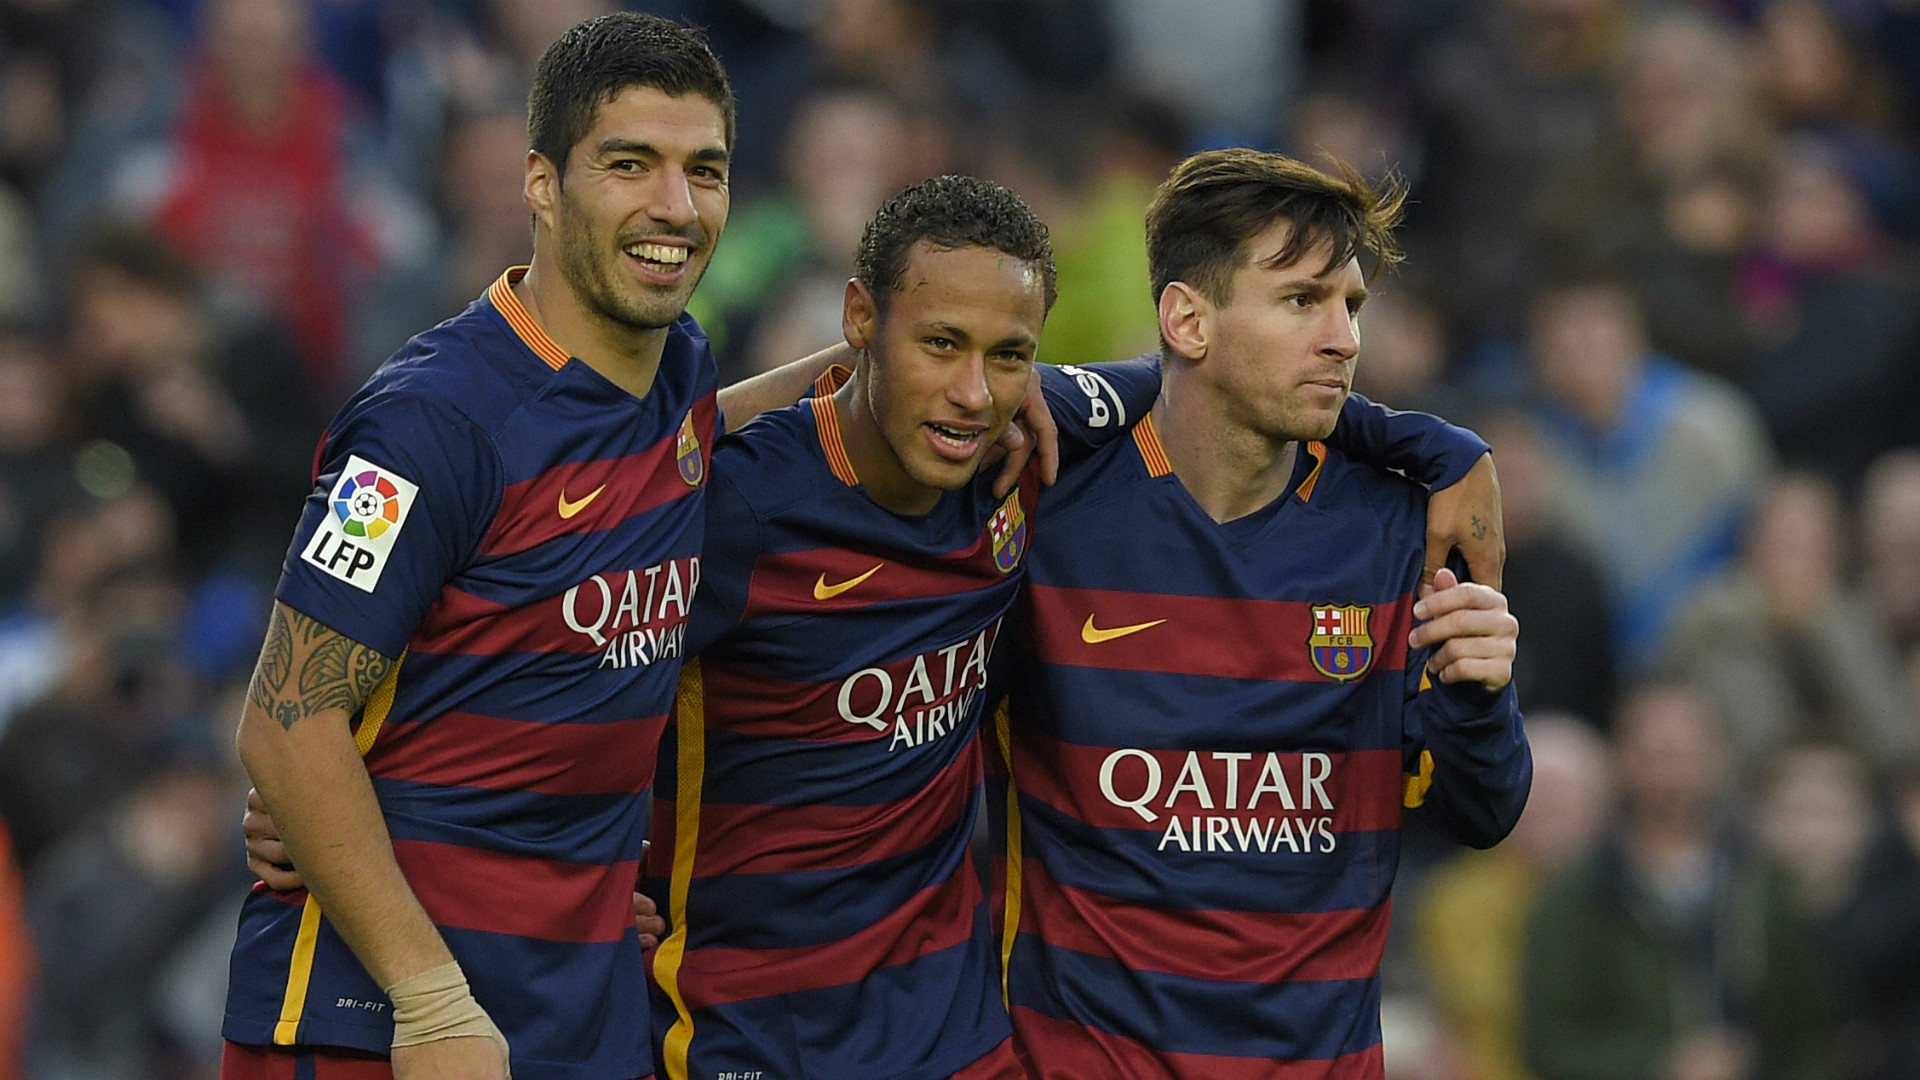 Football | Barcelona forward Neymar: MSN for Ballon d'Or podium | SPORTAL